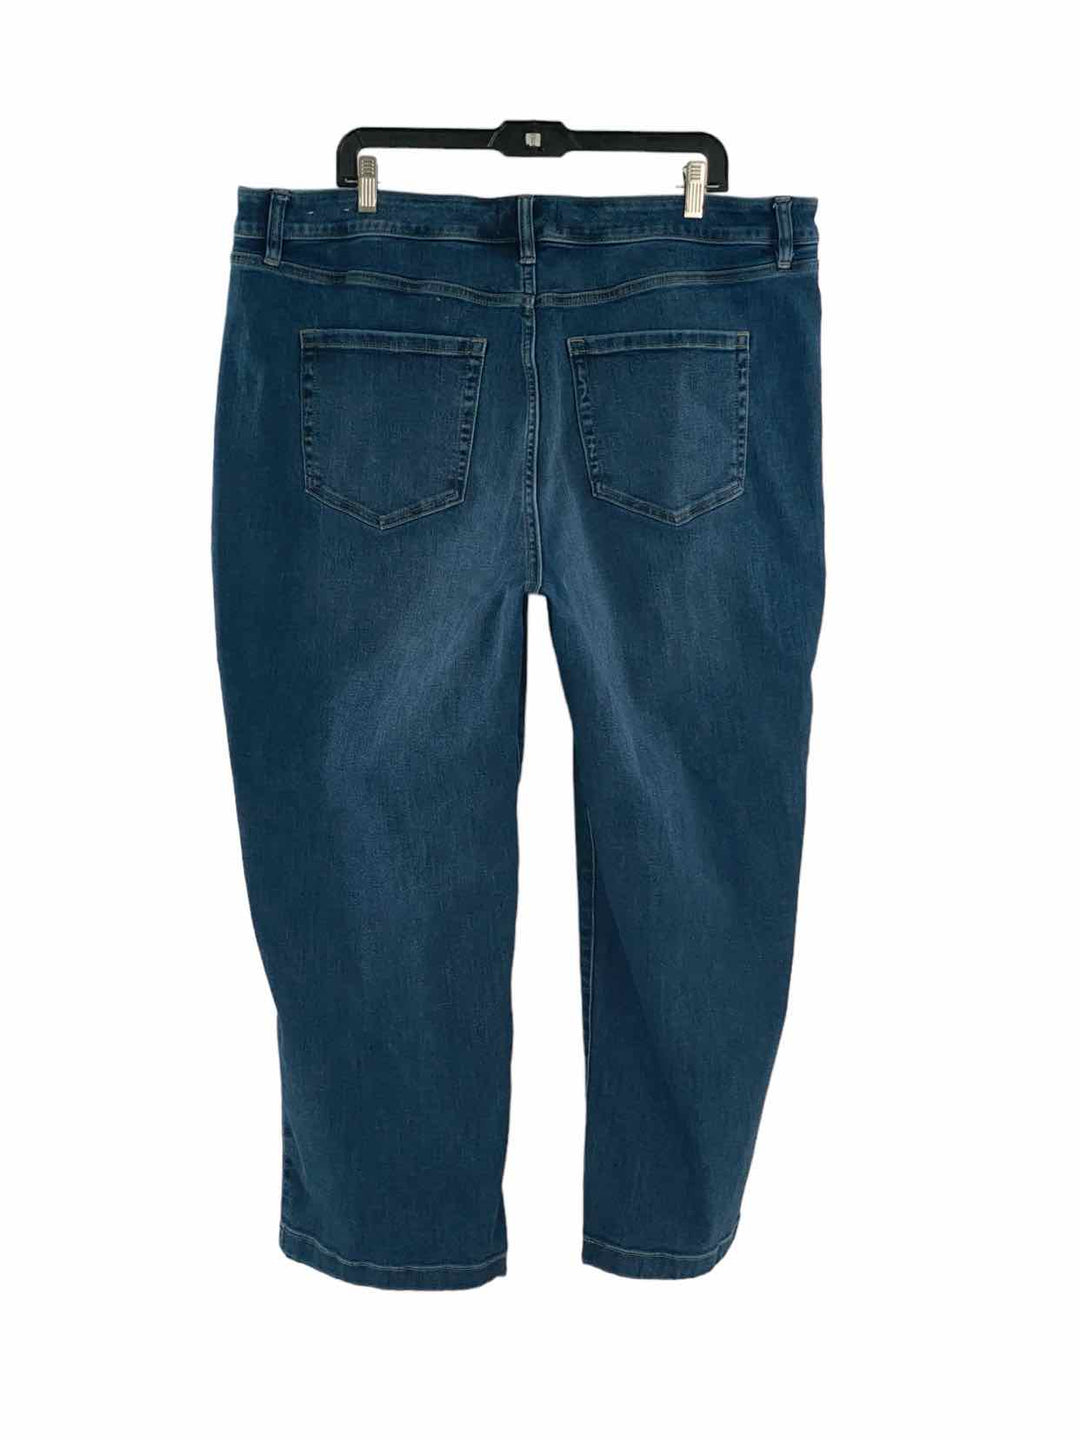 Lane Bryant Size 20 Blue Denim Jeans